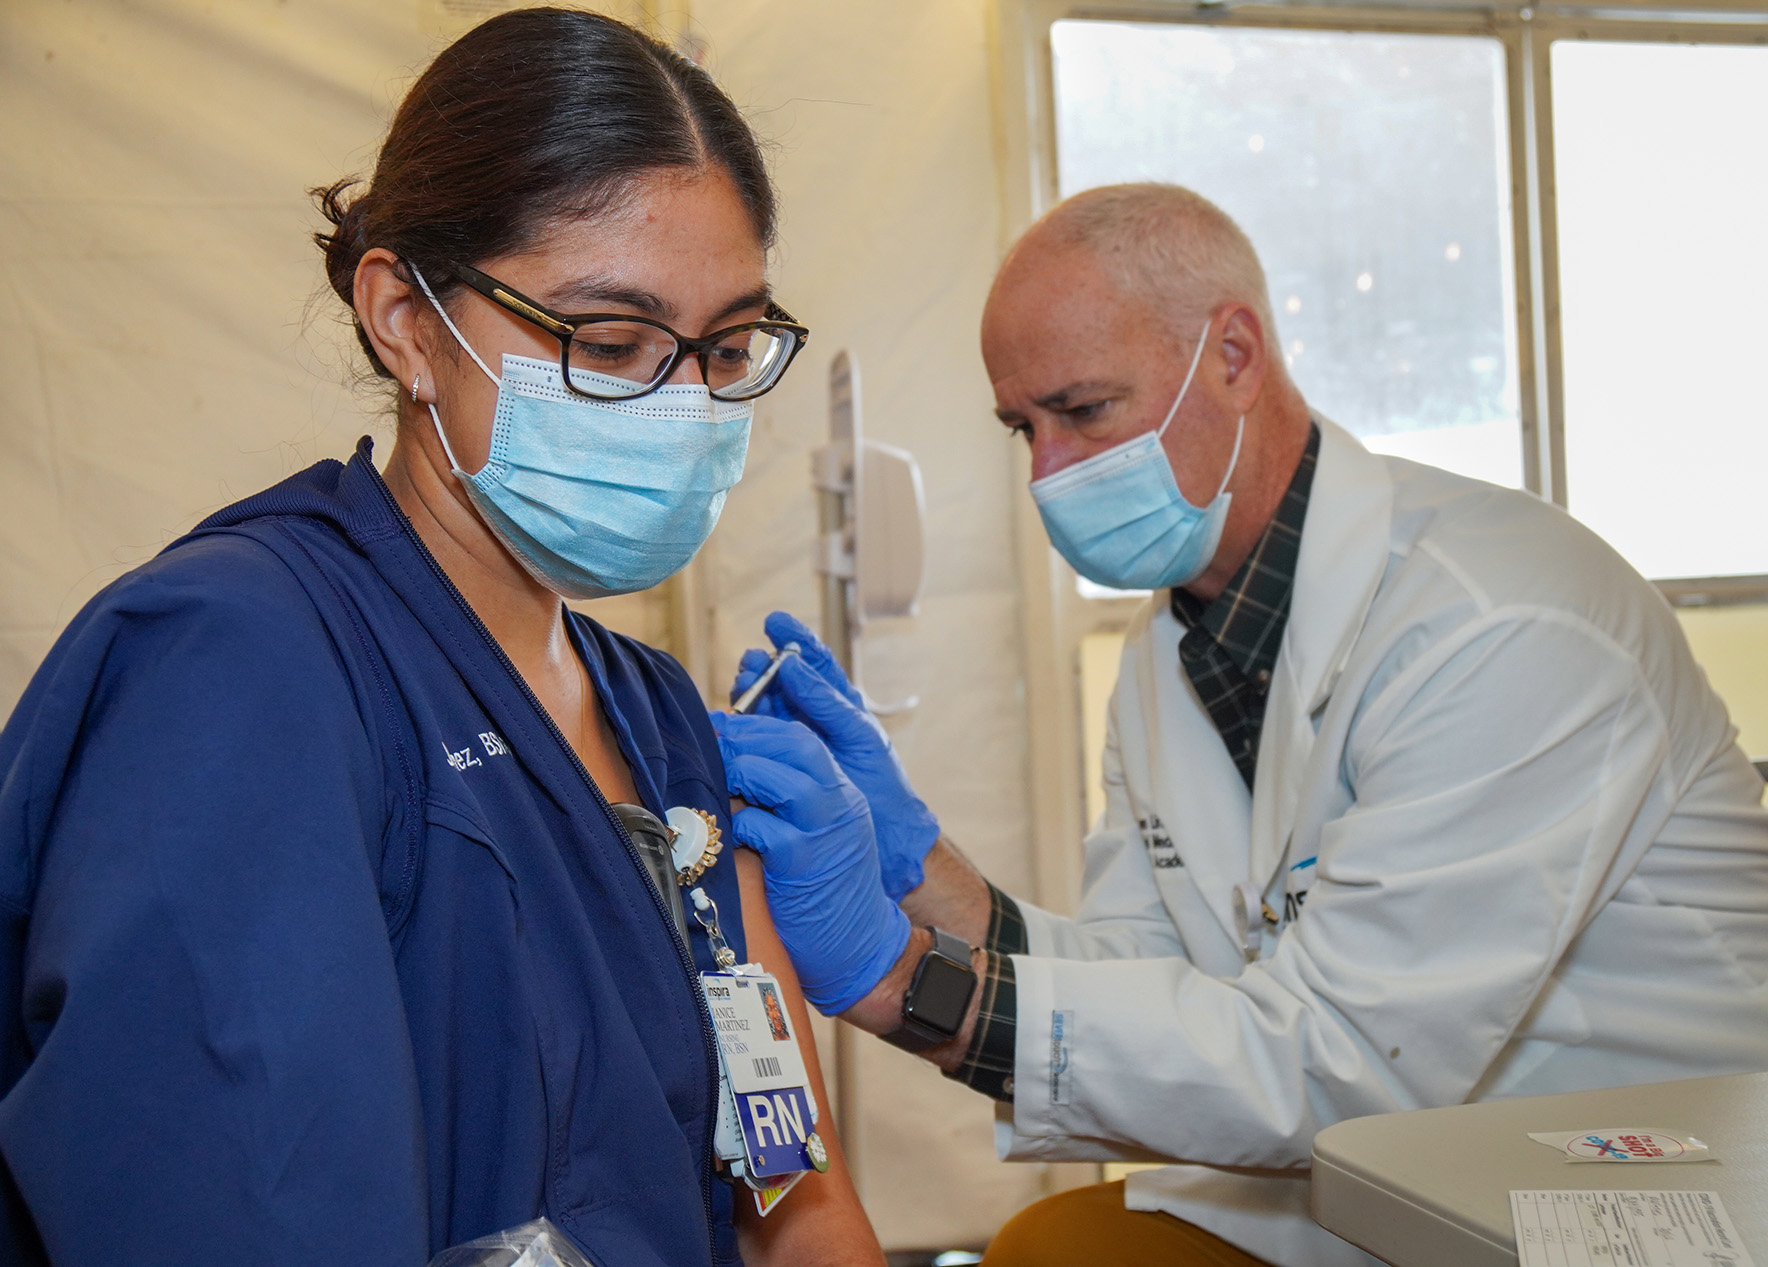 Inspira nurse receiving the COVID vaccine